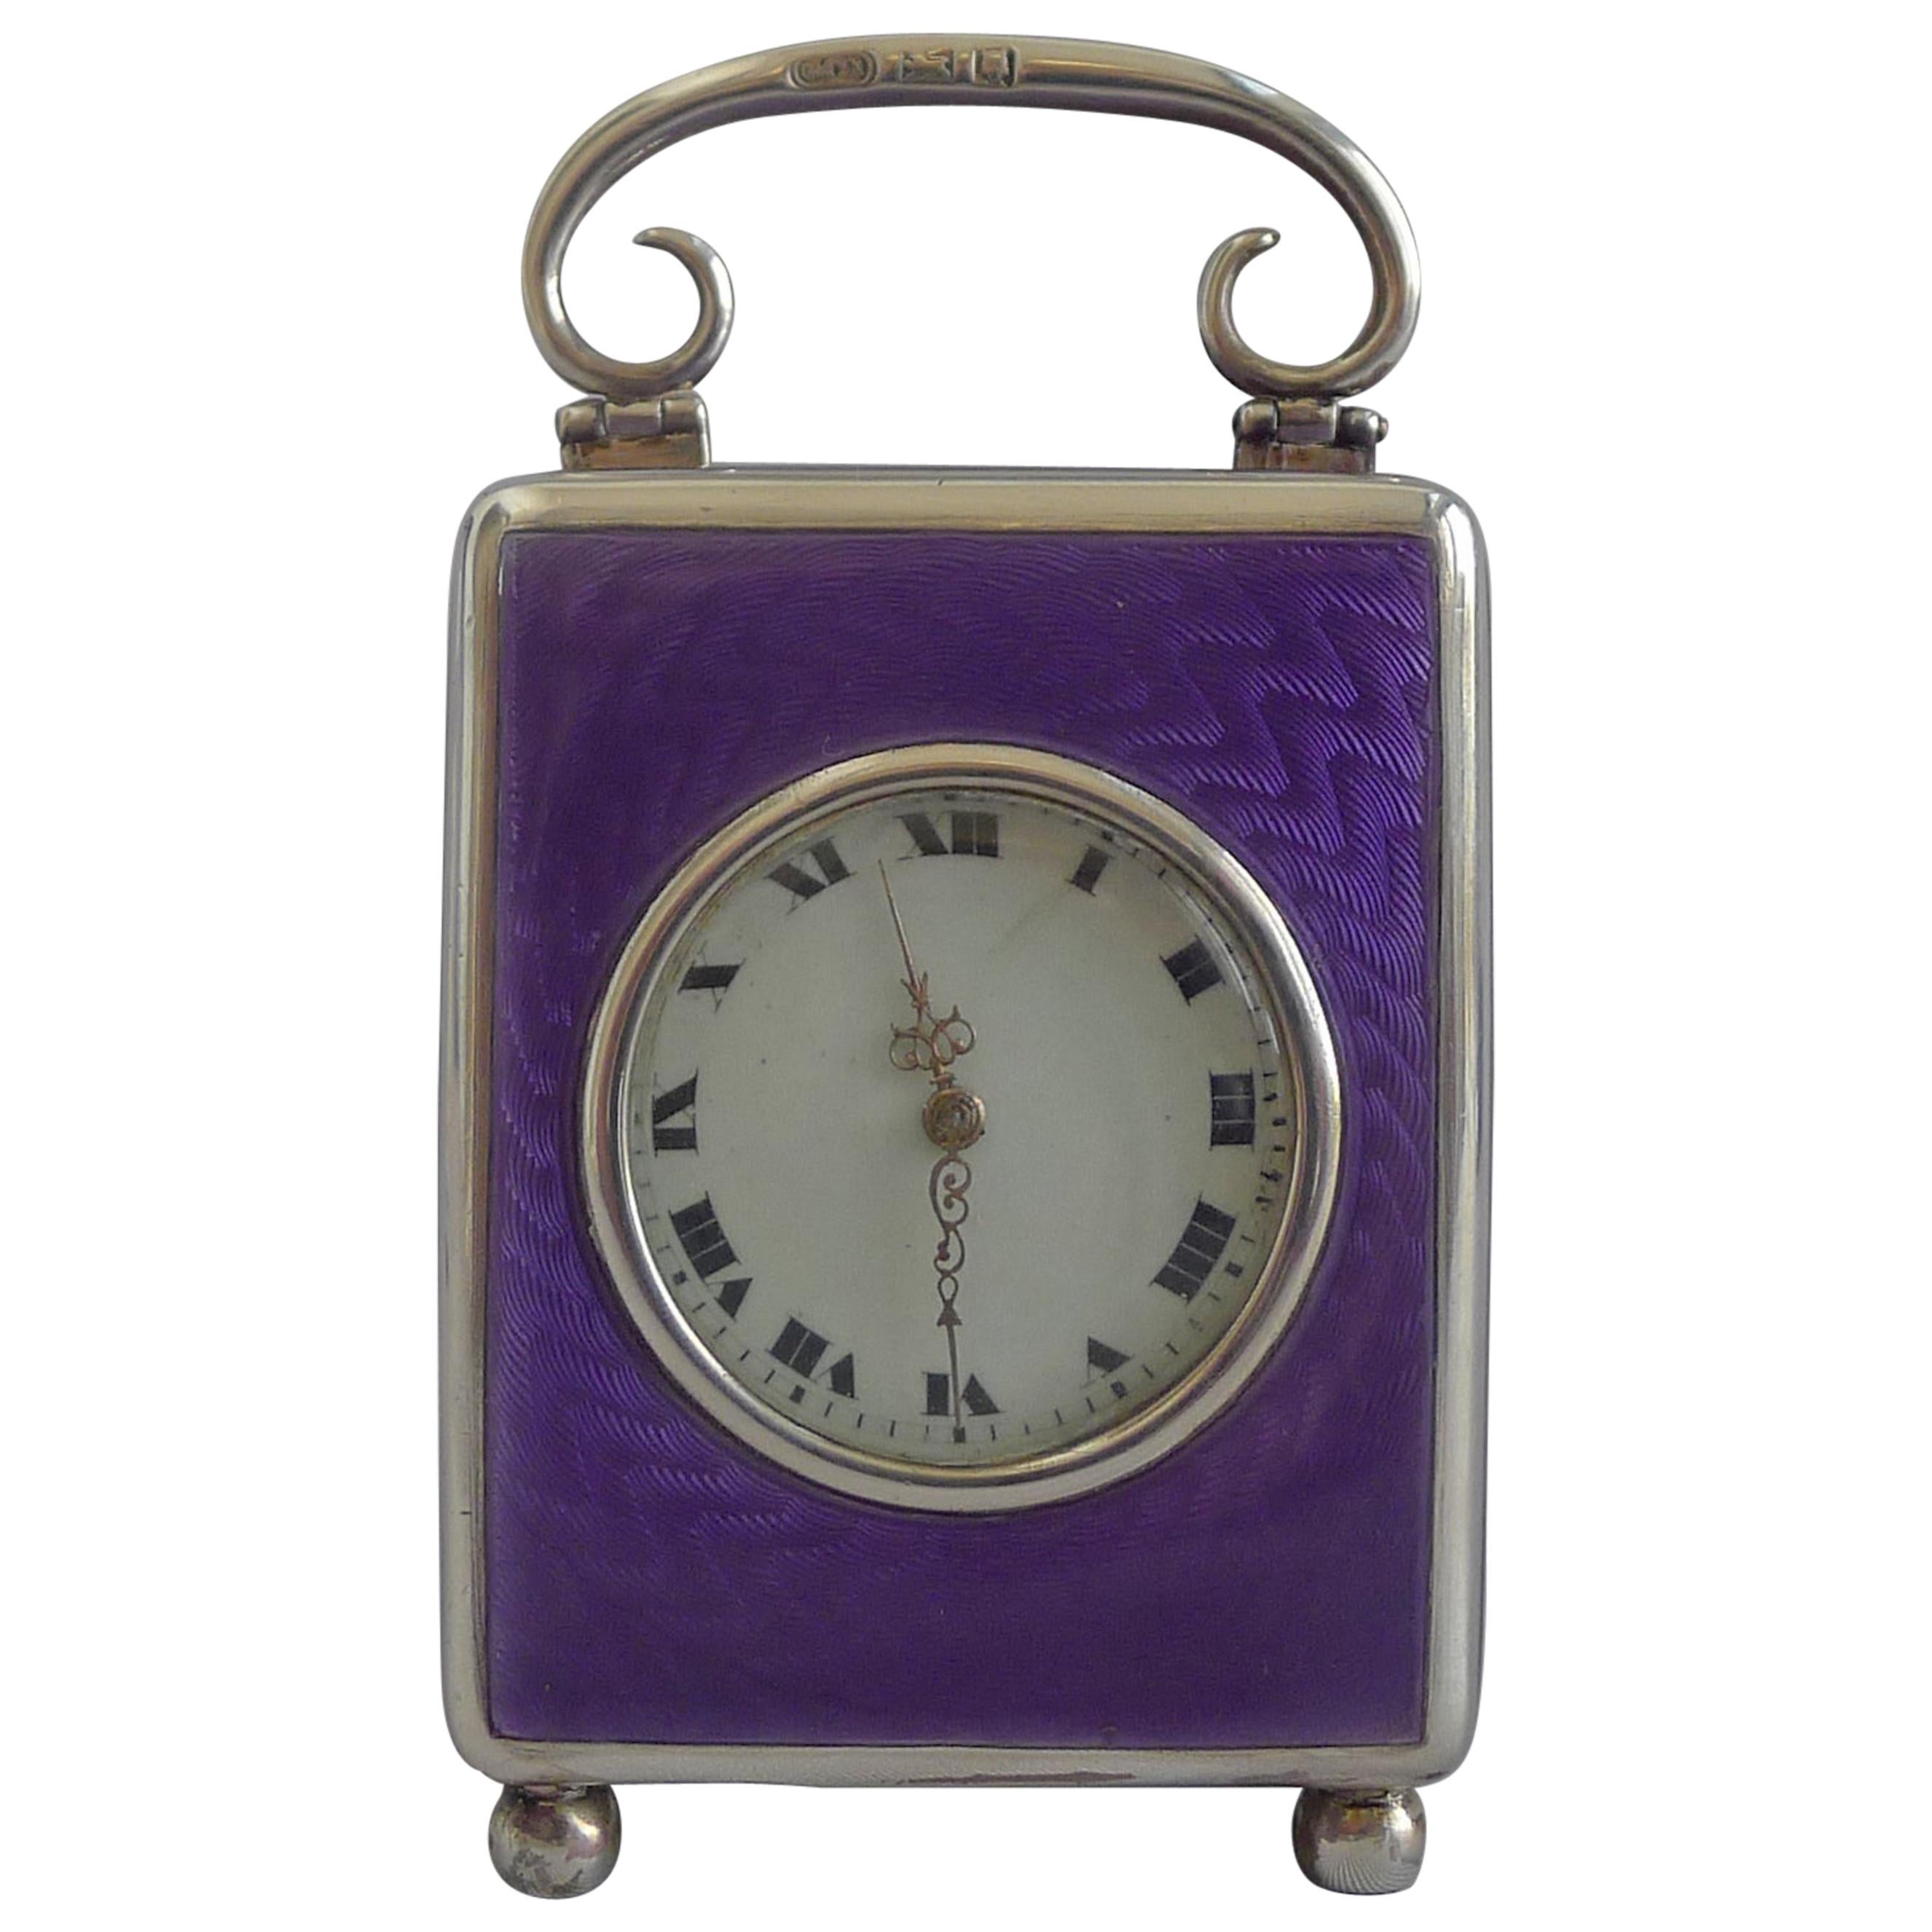 Silver and Guilloche enamel Miniature Carriage Clock by the Geneva Clock Company